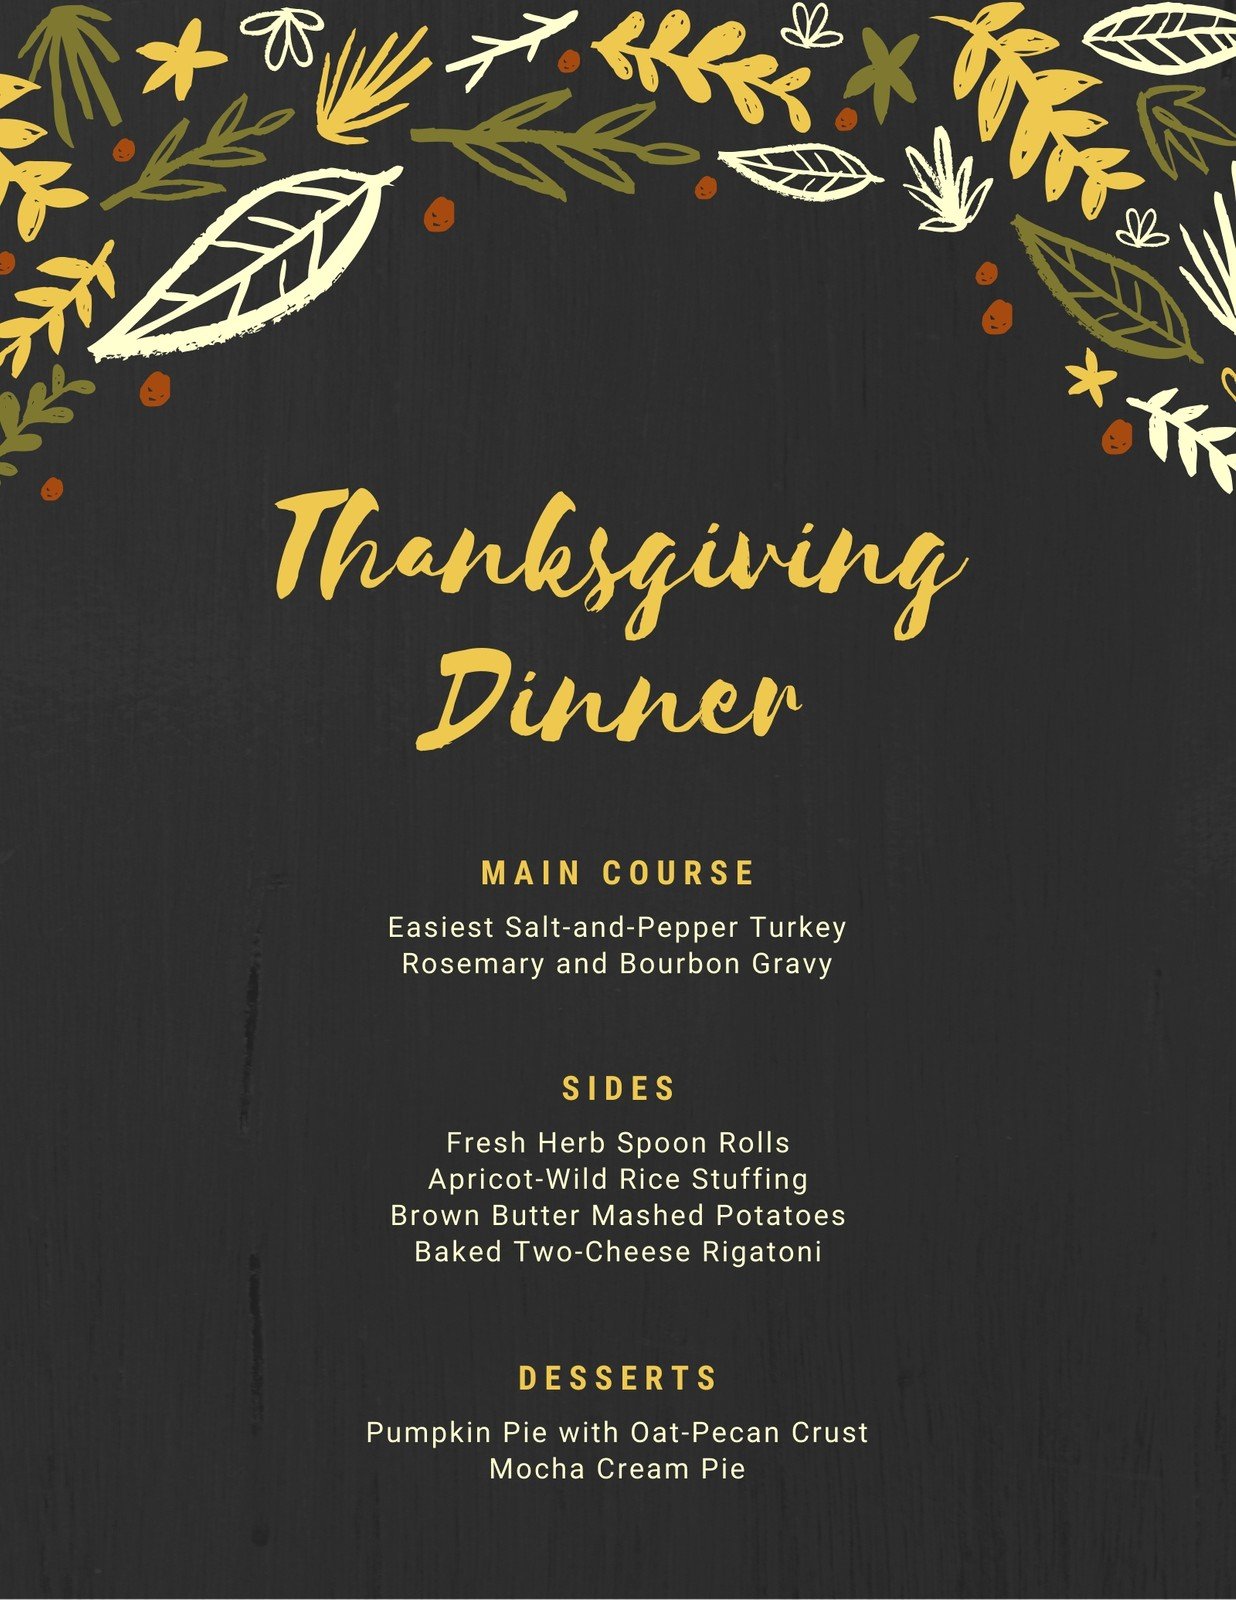 Free printable, customizable Thanksgiving menu templates  Canva Pertaining To Thanksgiving Day Menu Template